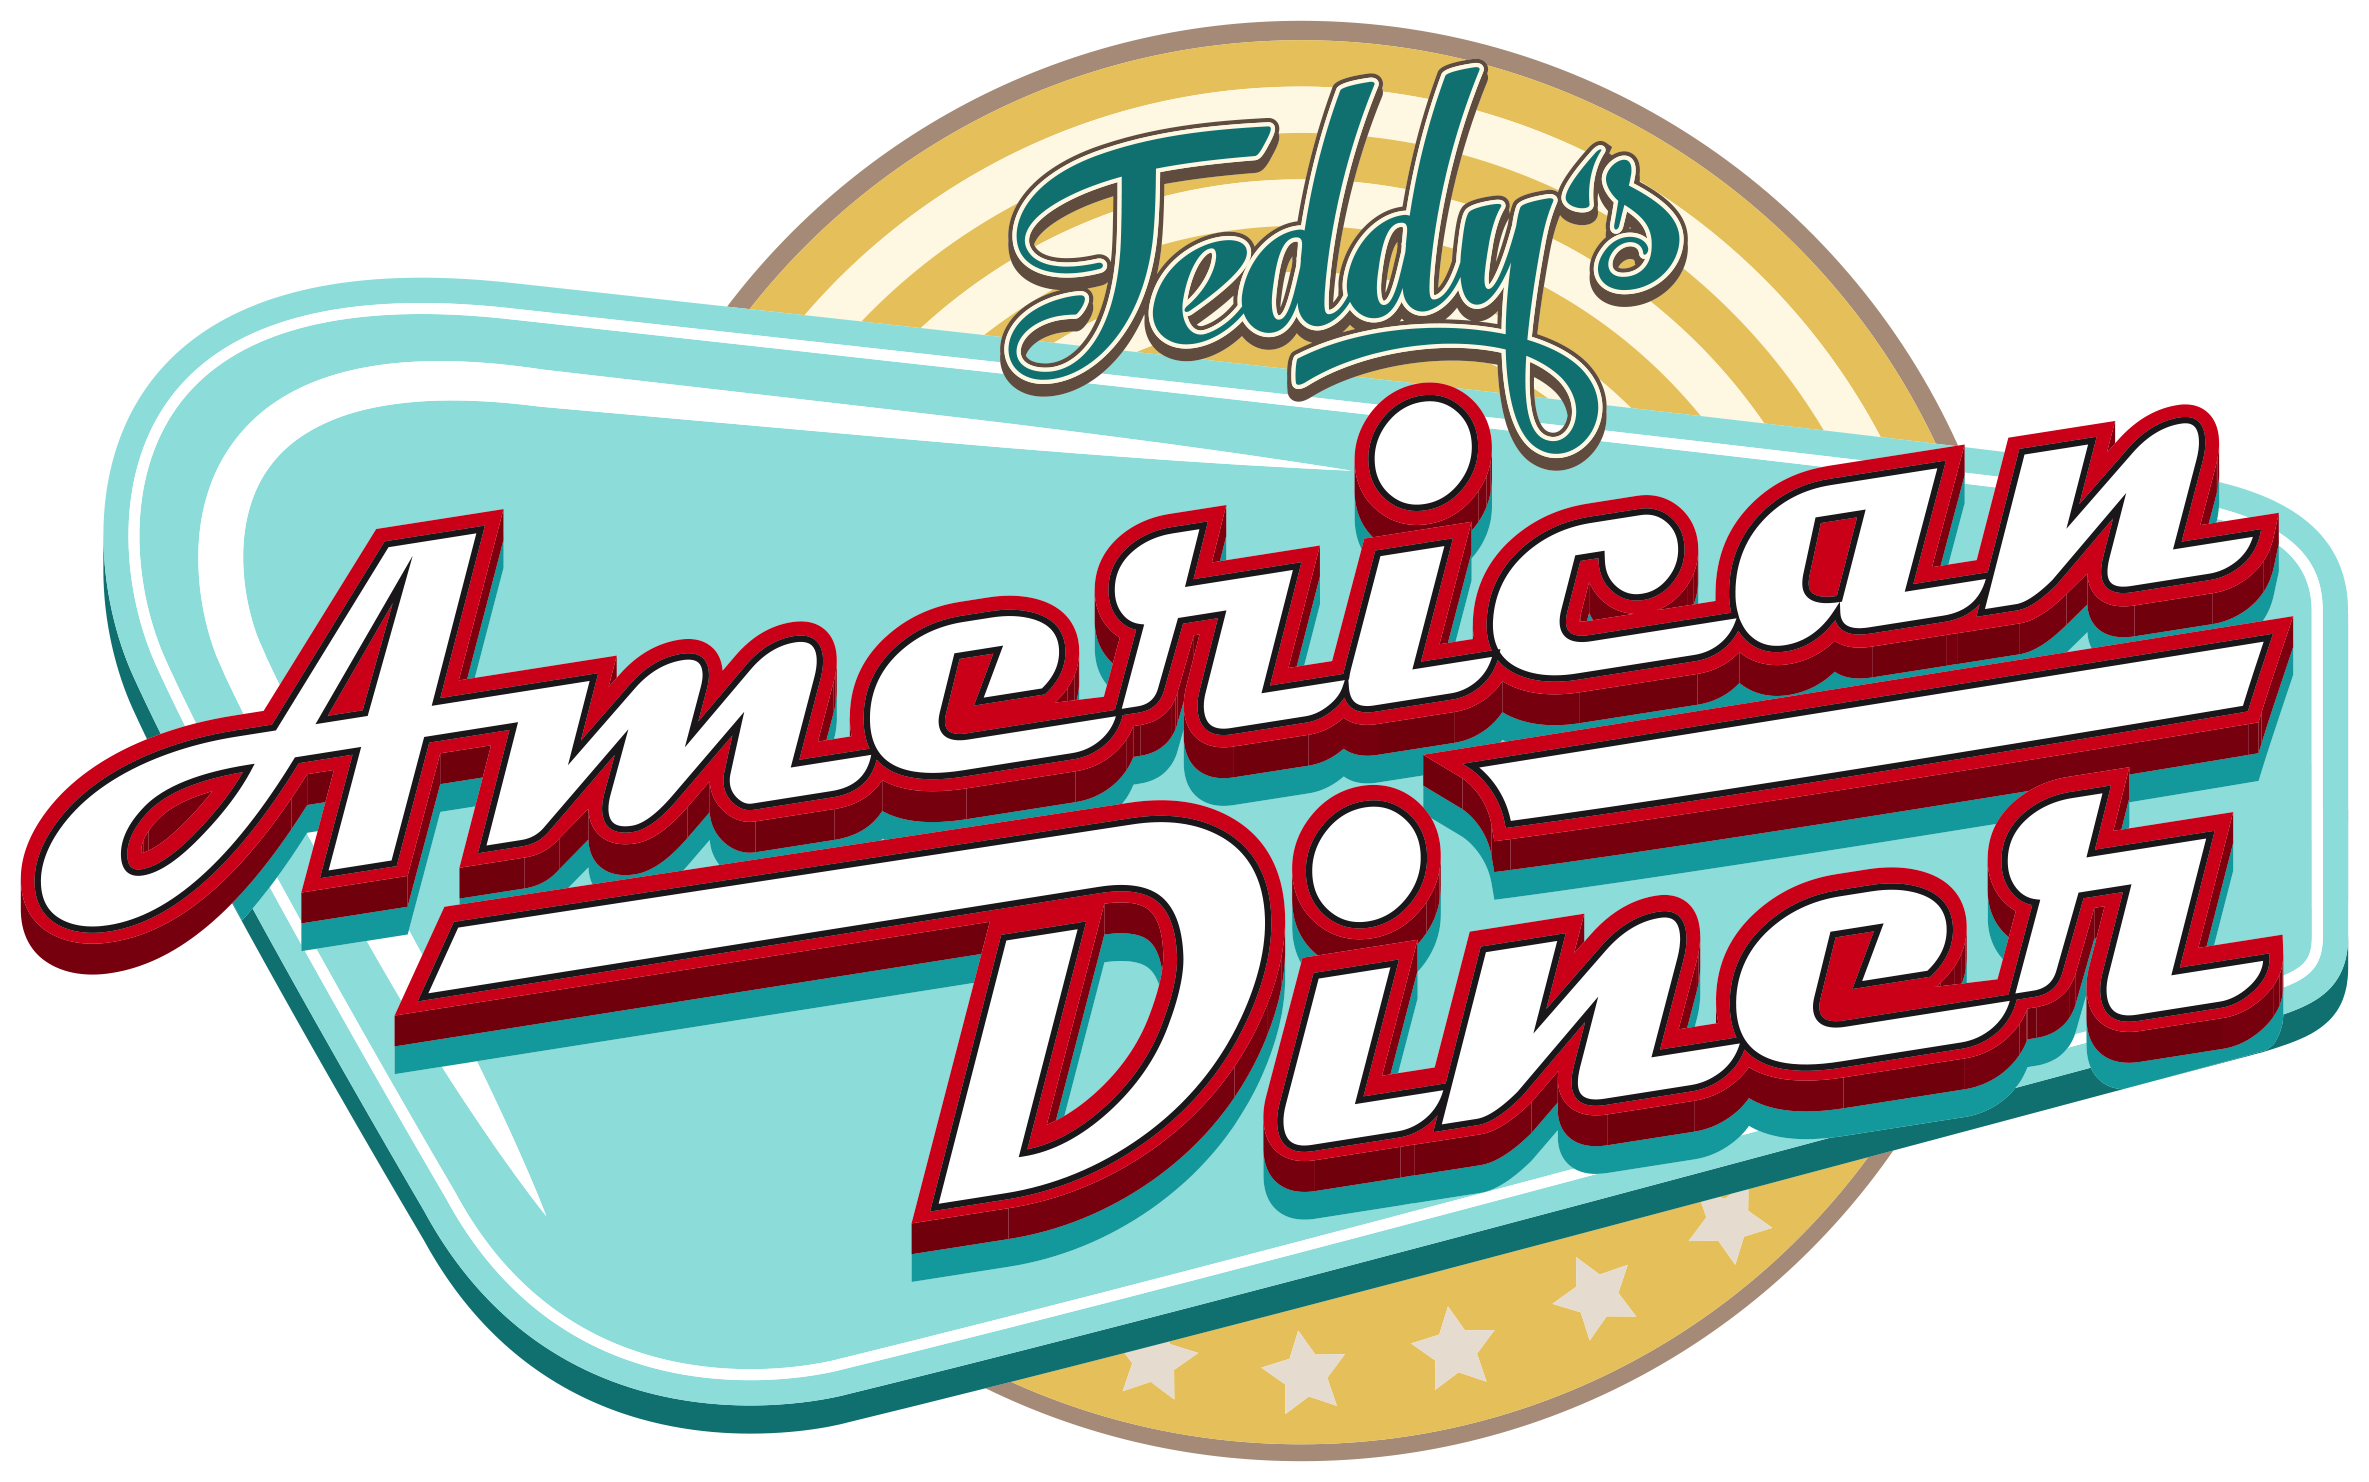 Teddy's American Diner